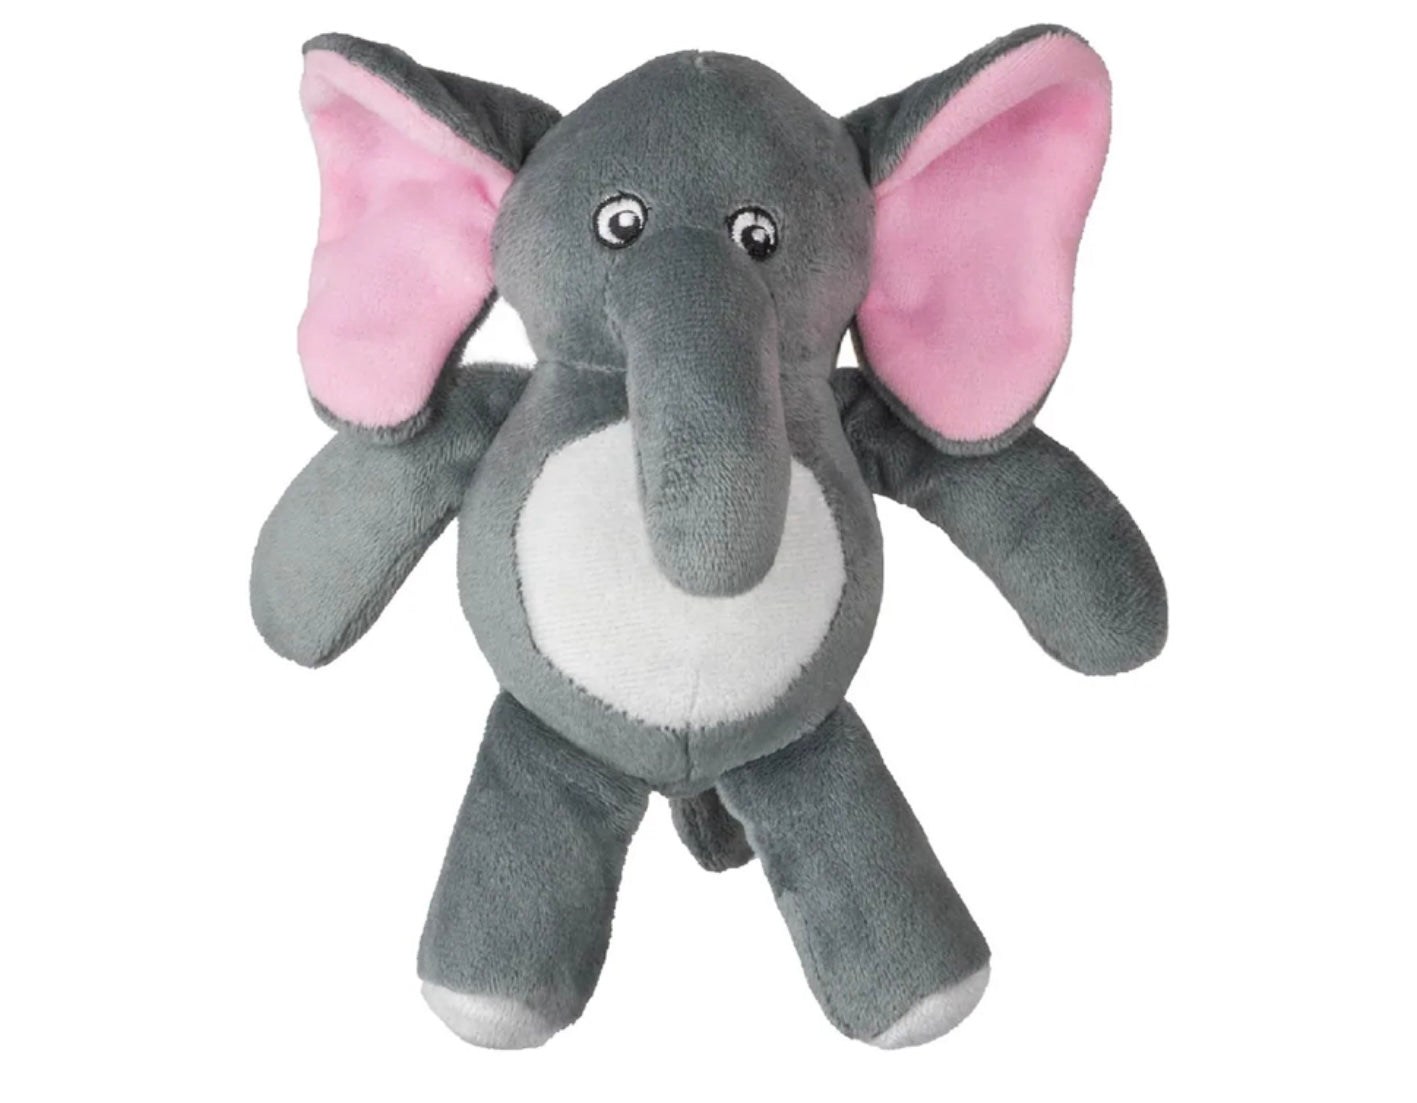 Long eared elephant plush toy